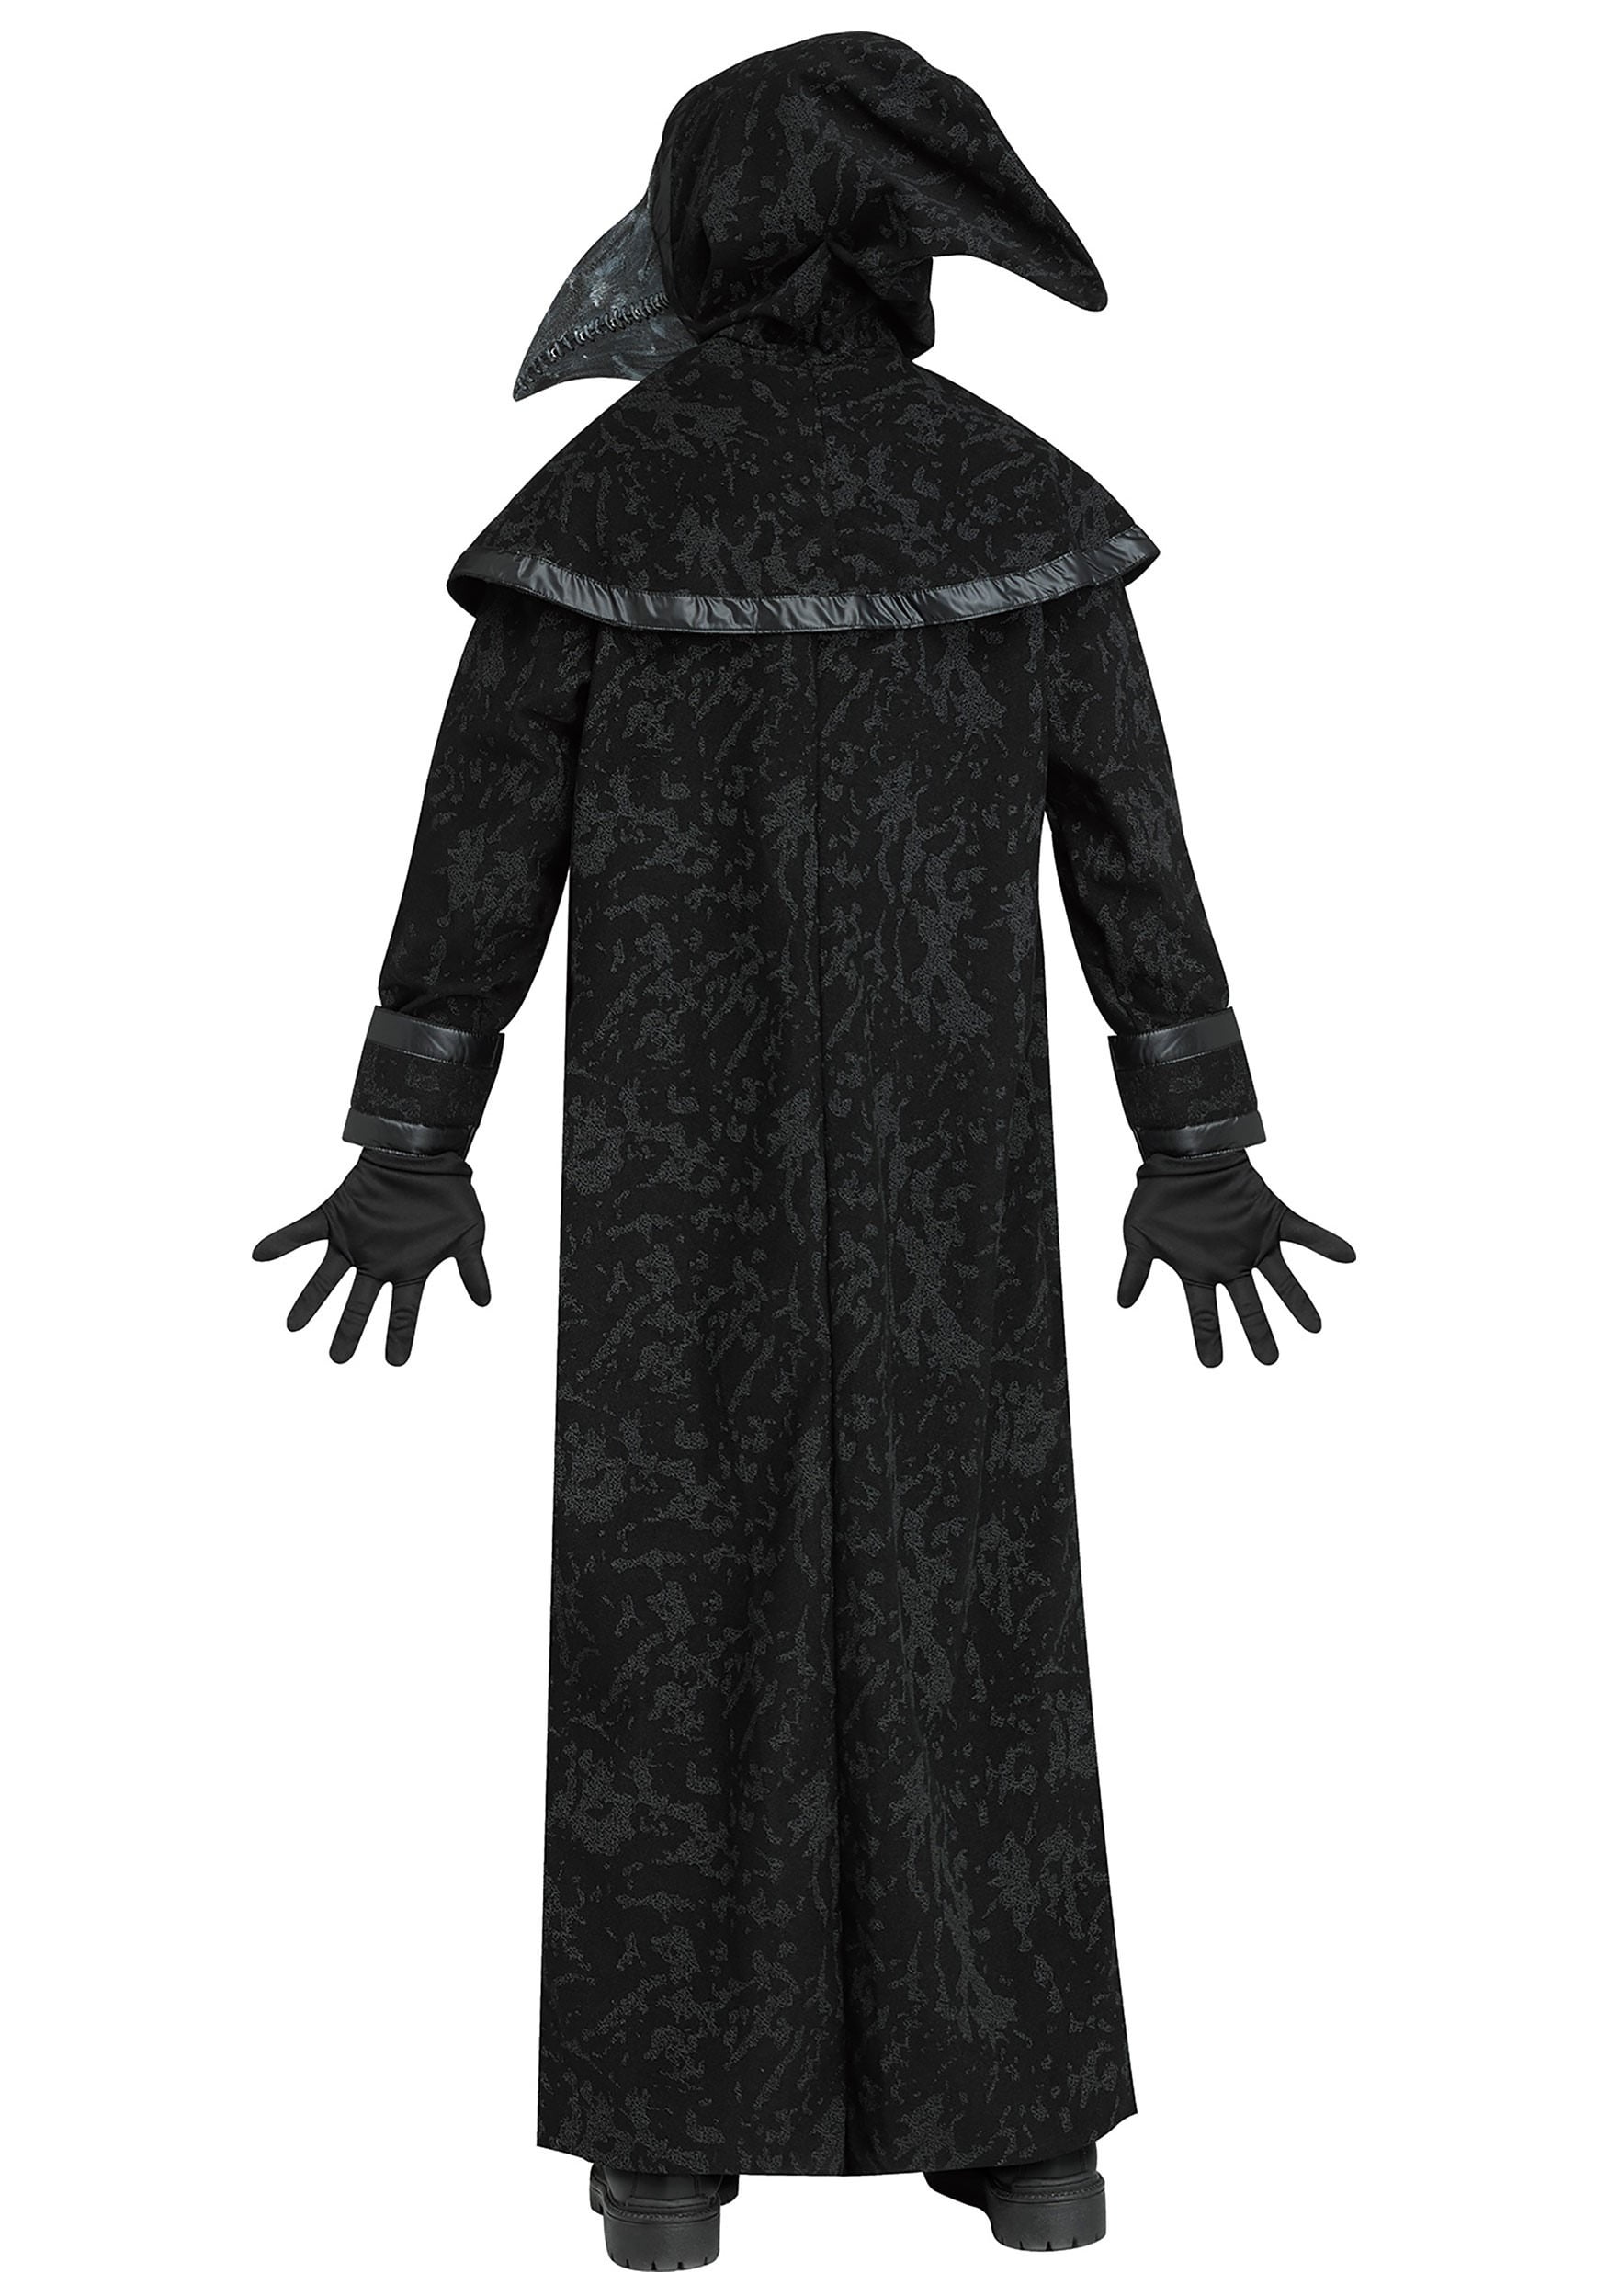 Plague Doctor Costume for Kids - Walmart.com